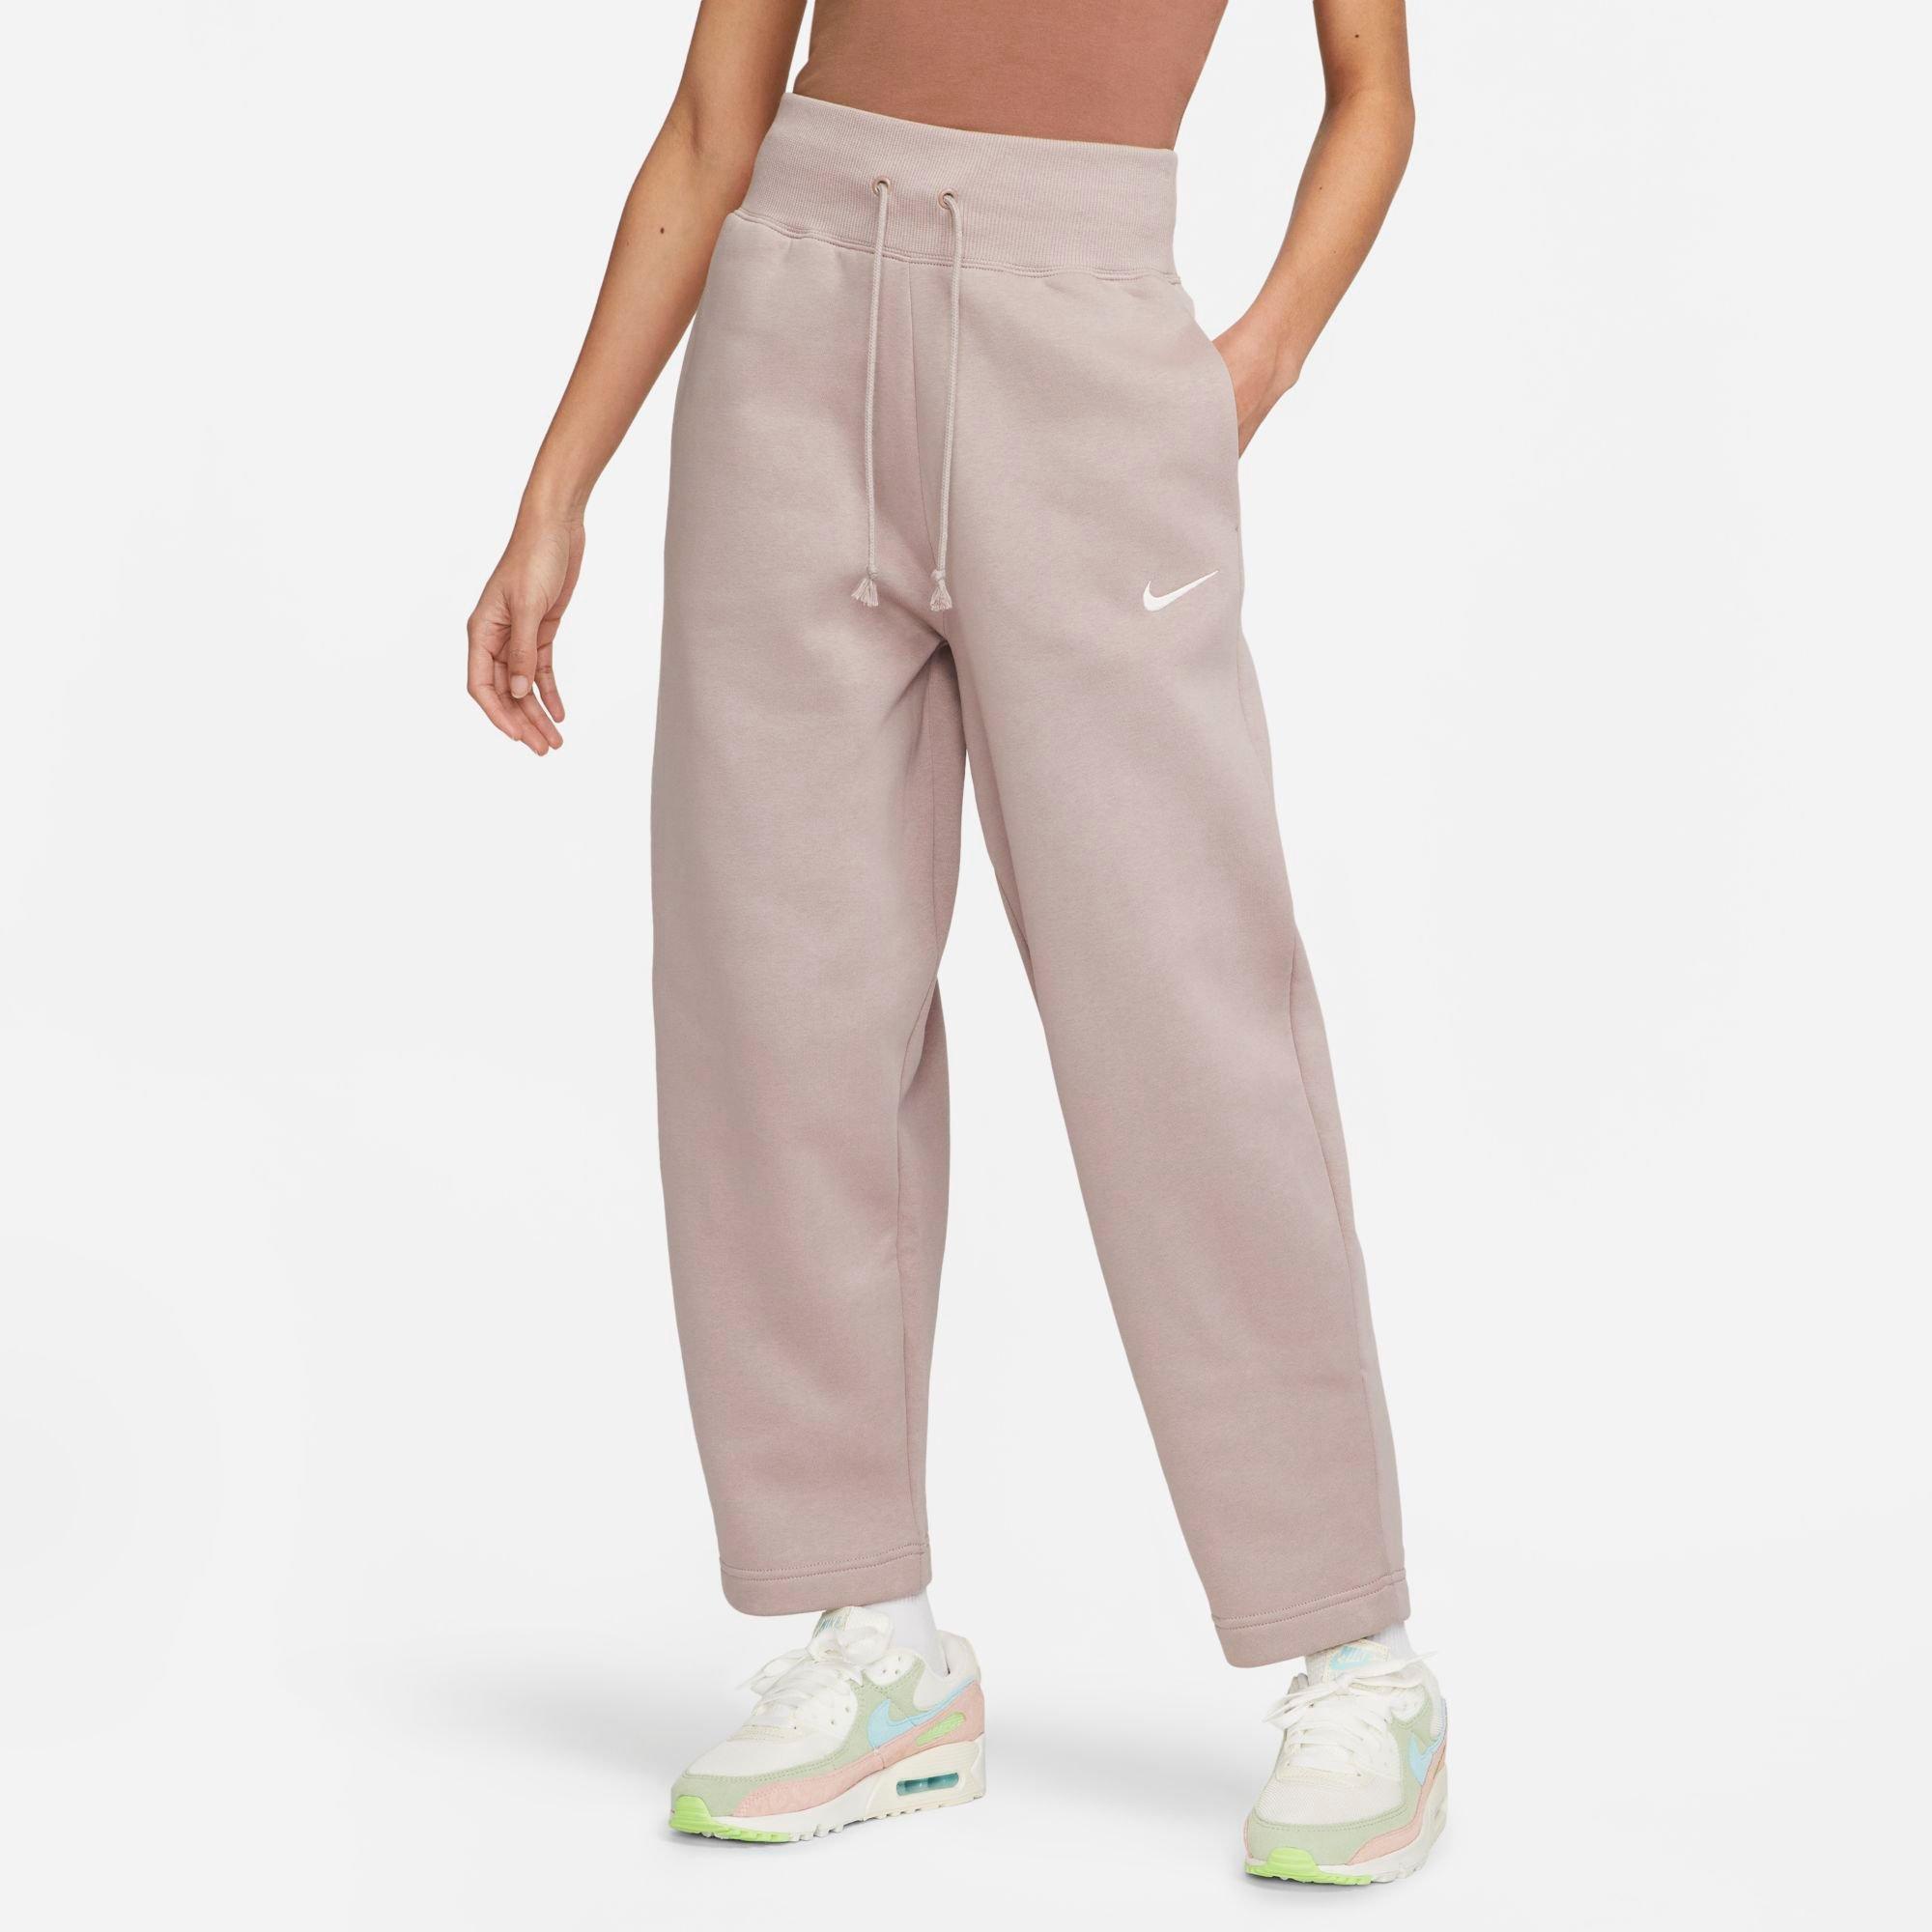 Nike Women's Sportswear Phoenix Fleece Curve Sweatpants In Diffused Taupe/sail